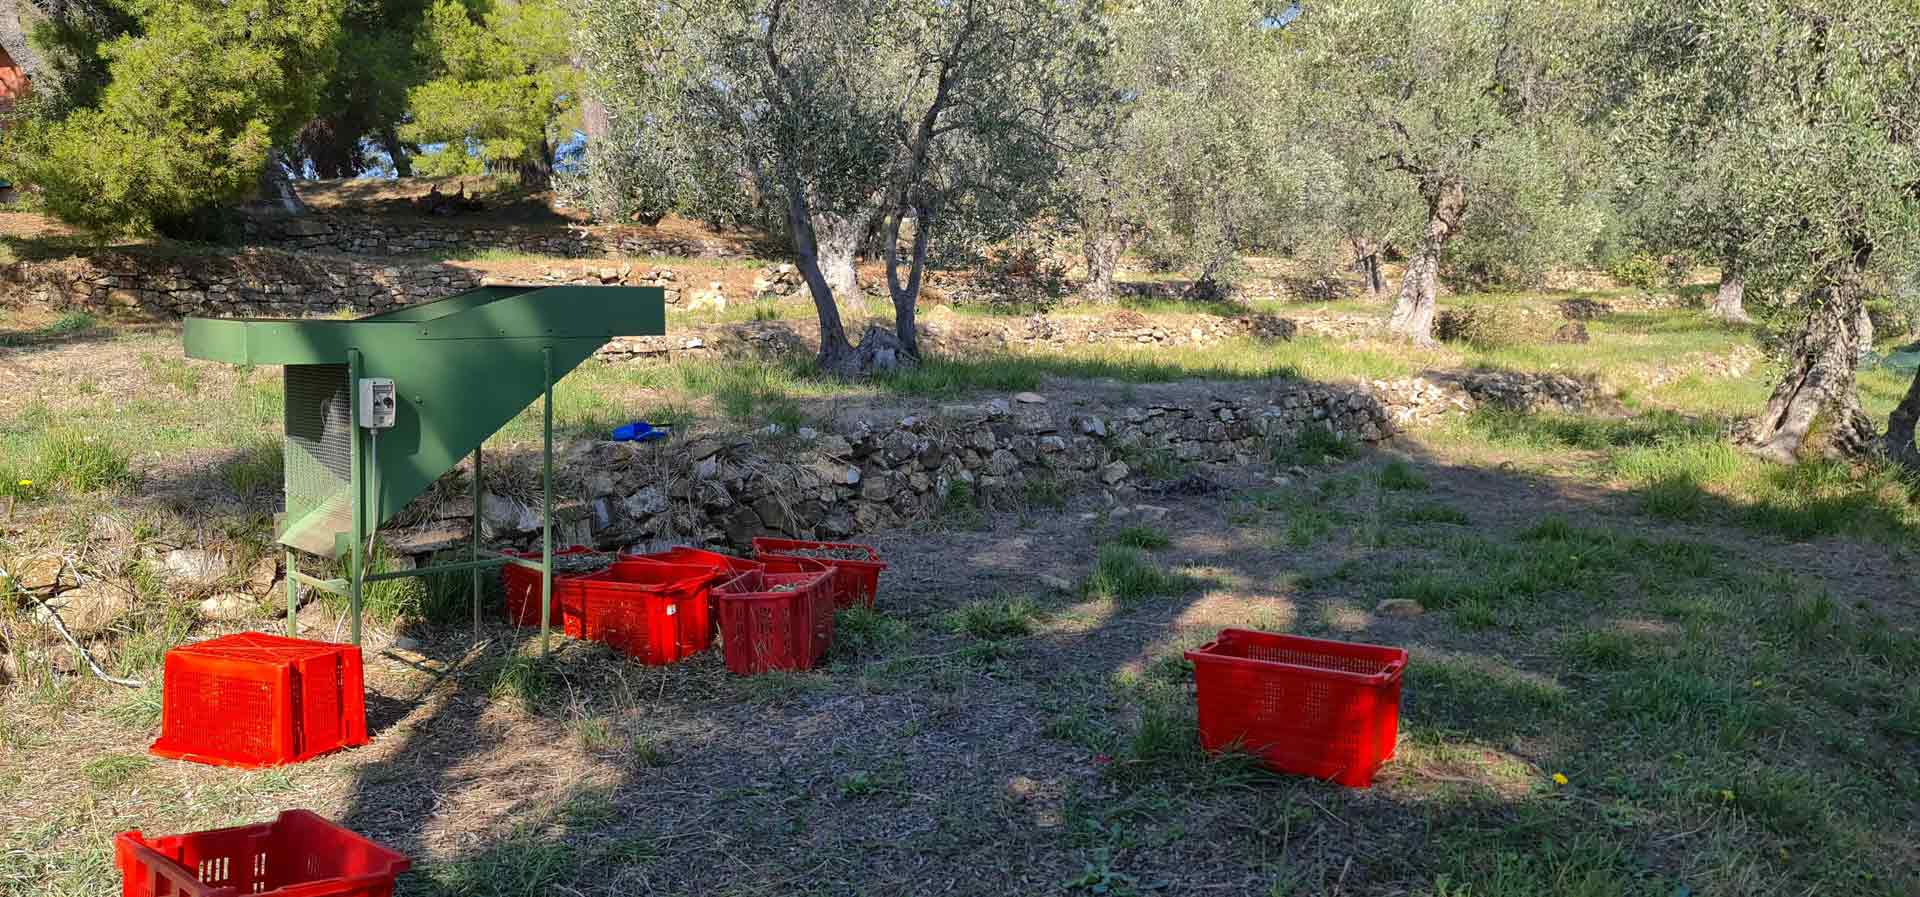 olivenbaum adoptieren 2021